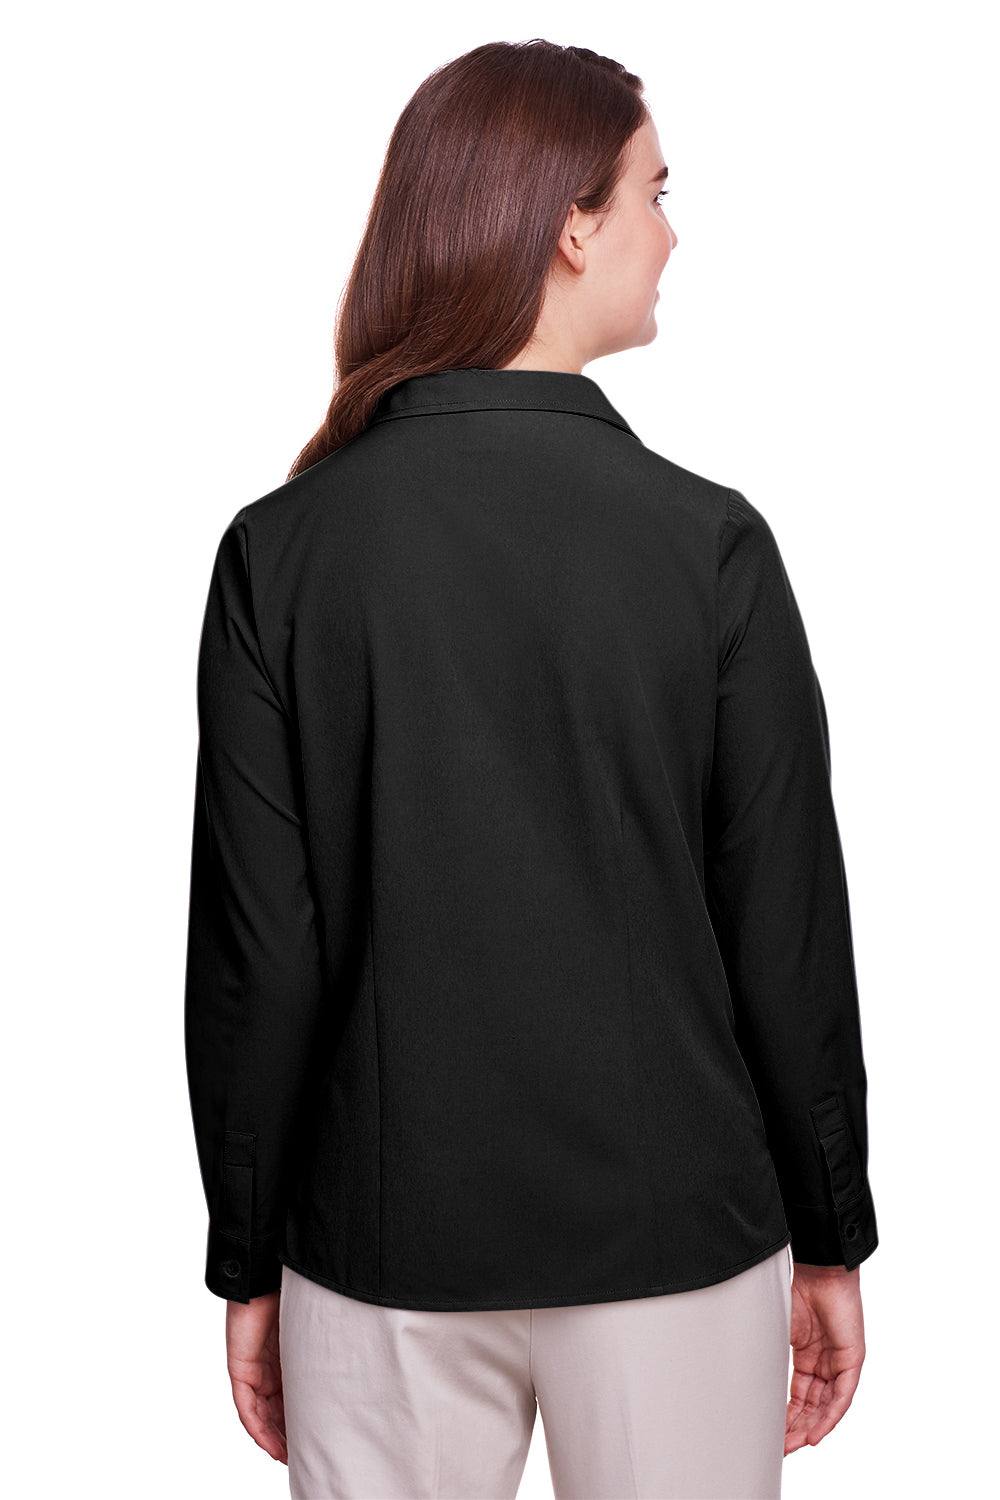 UltraClub UC500W Womens Bradley Performance Moisture Wicking Long Sleeve Button Down Shirt Black Back